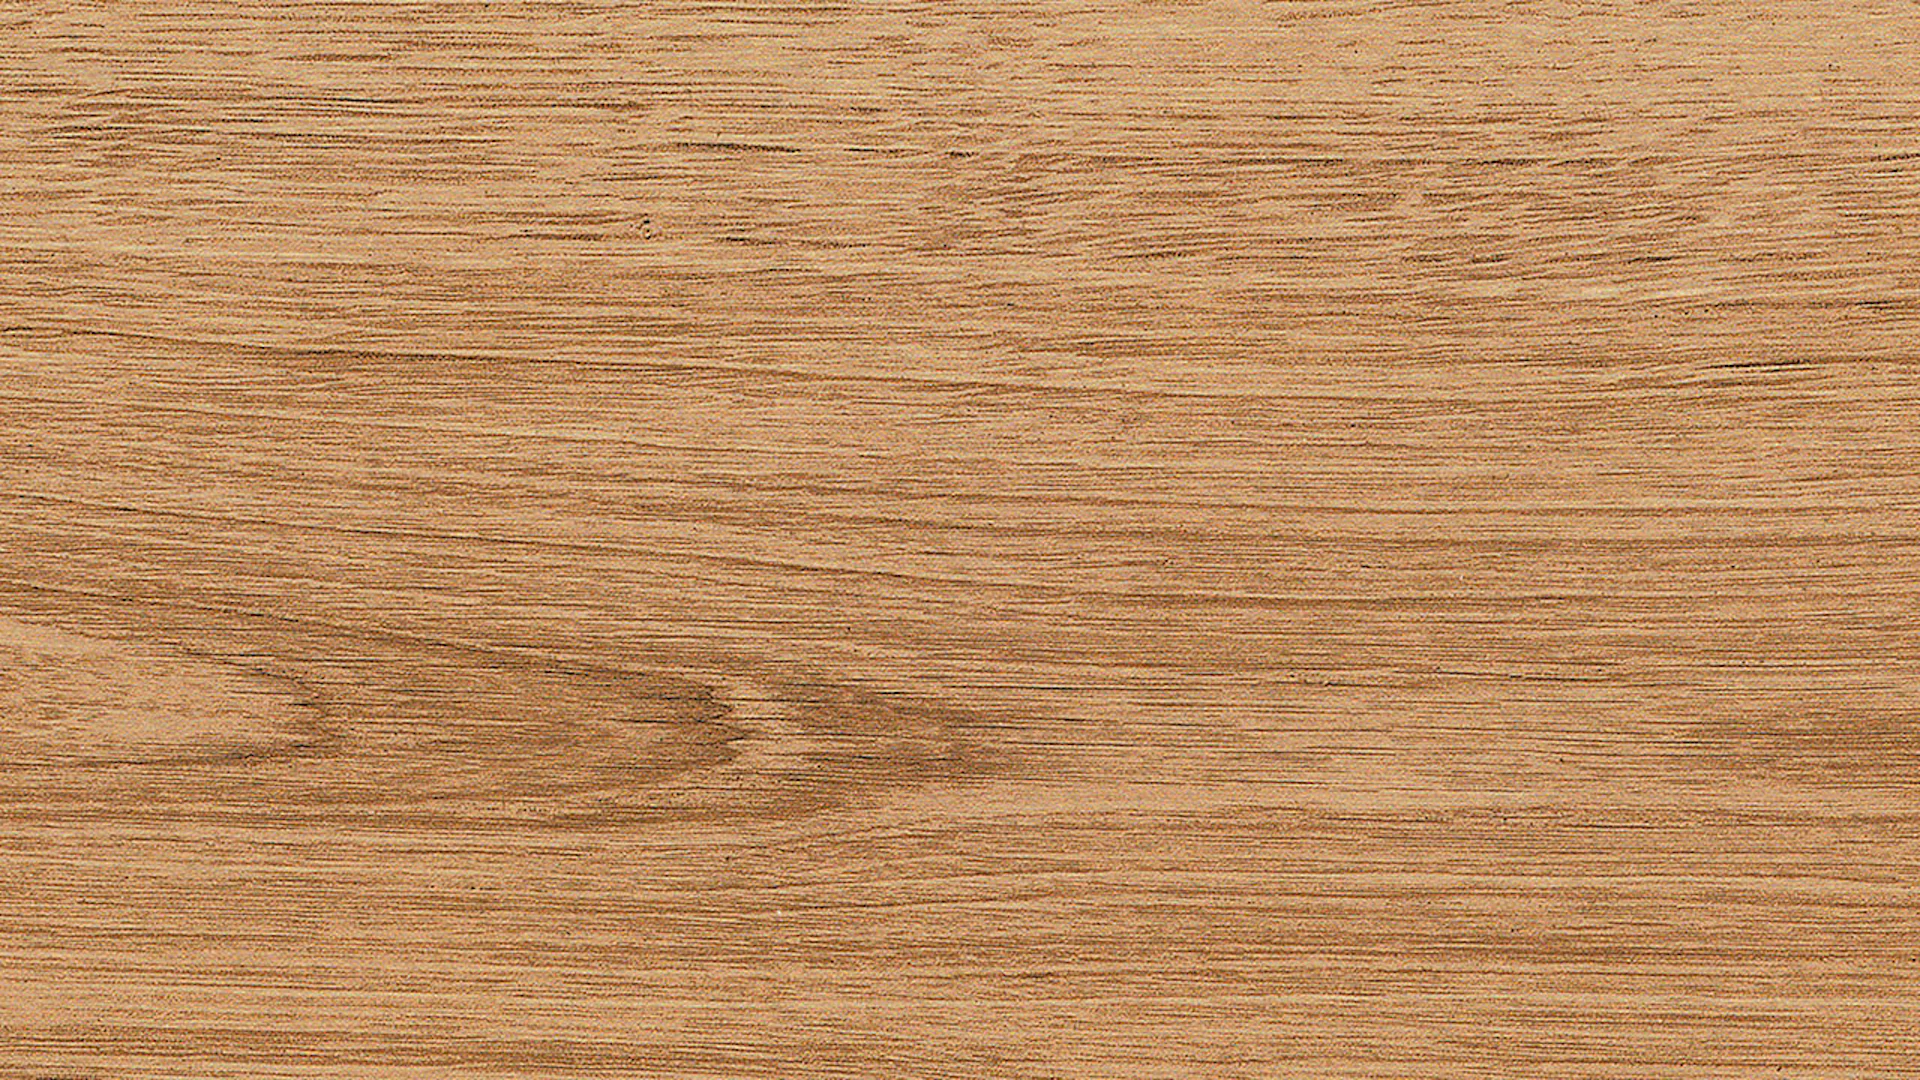 Wicanders click cork flooring - Wood Essence Classic Prime Oak 10,5mm Cork